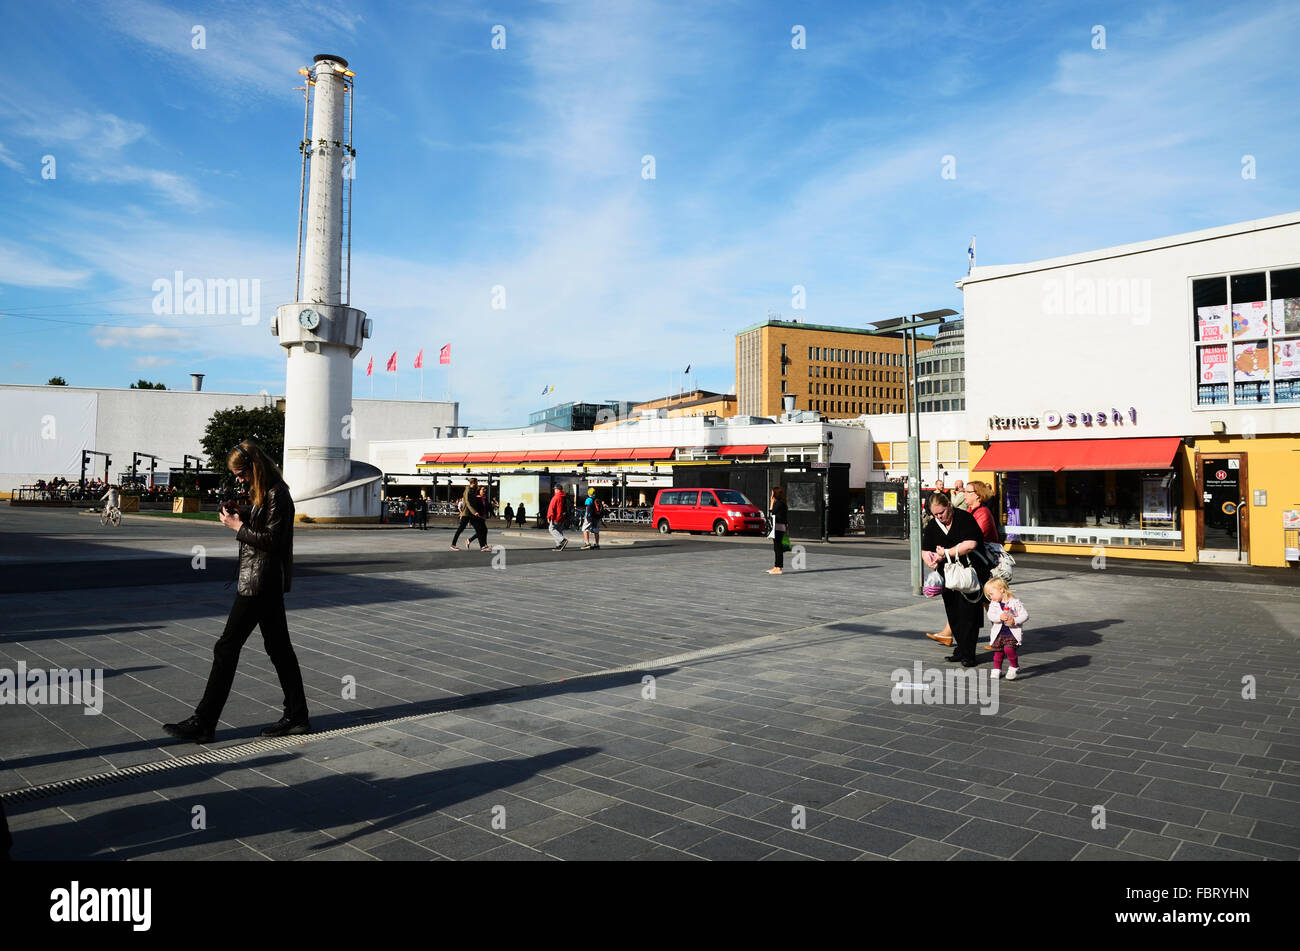 Lasipalatsi Square, located on Mannerheimintie in the Kamppi district of Helsinki, Finland. Stock Photo